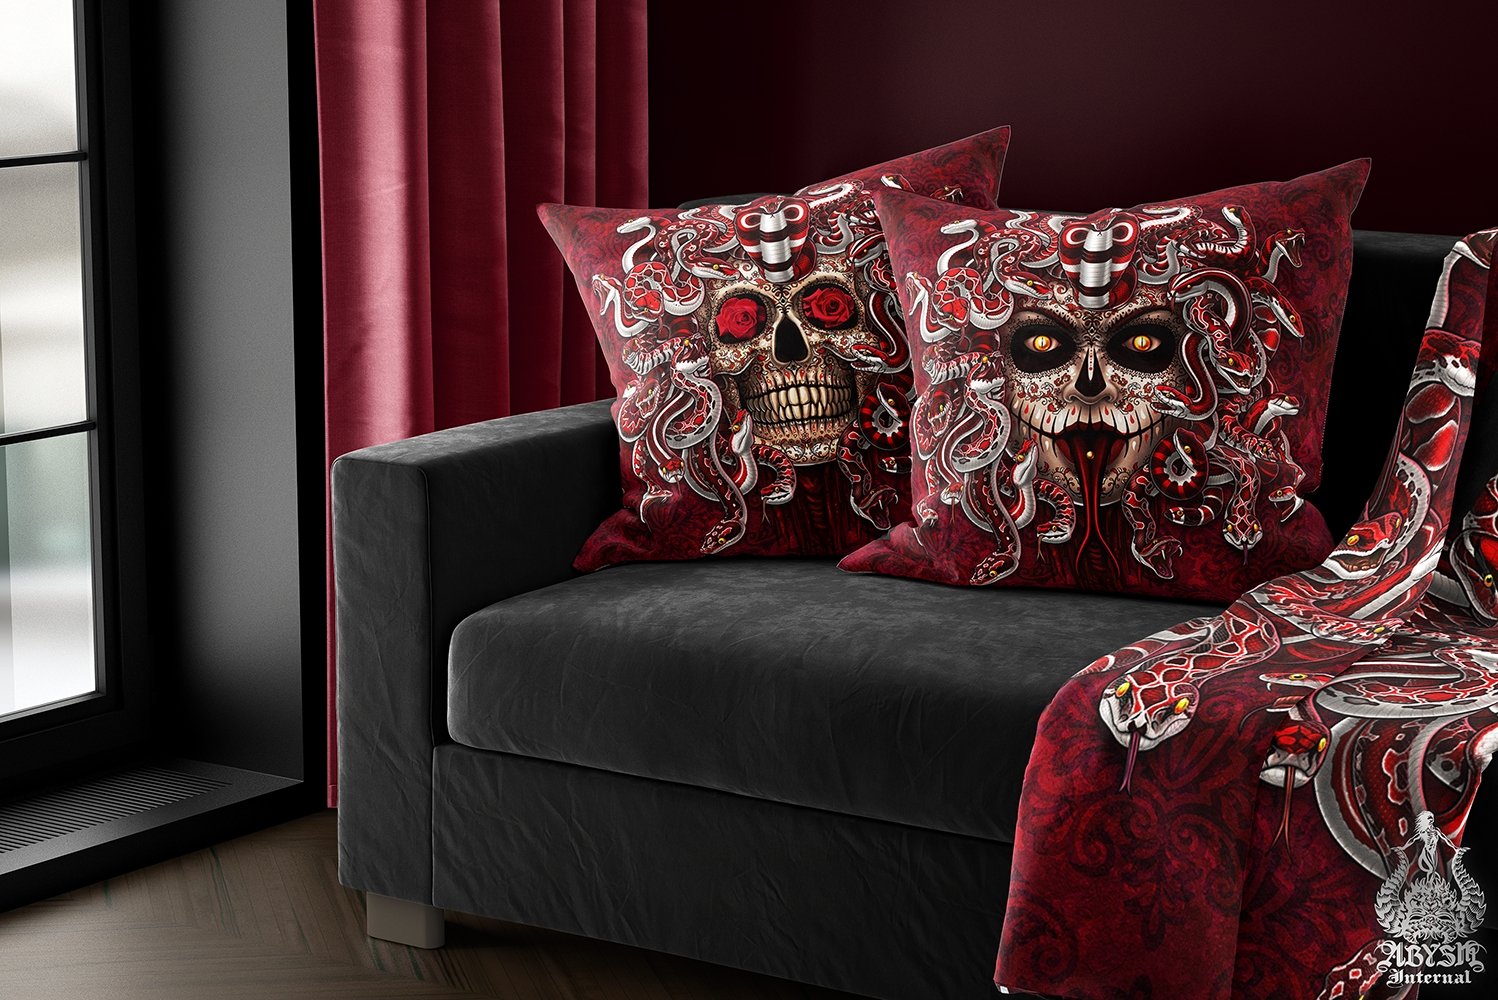 Sugar Skull Throw Pillow, Decorative Accent Cushion, Medusa, Dia de los Muertos Decor, Day of the Dead, Mexican Art, Alternative Home - Red Snakes - Abysm Internal